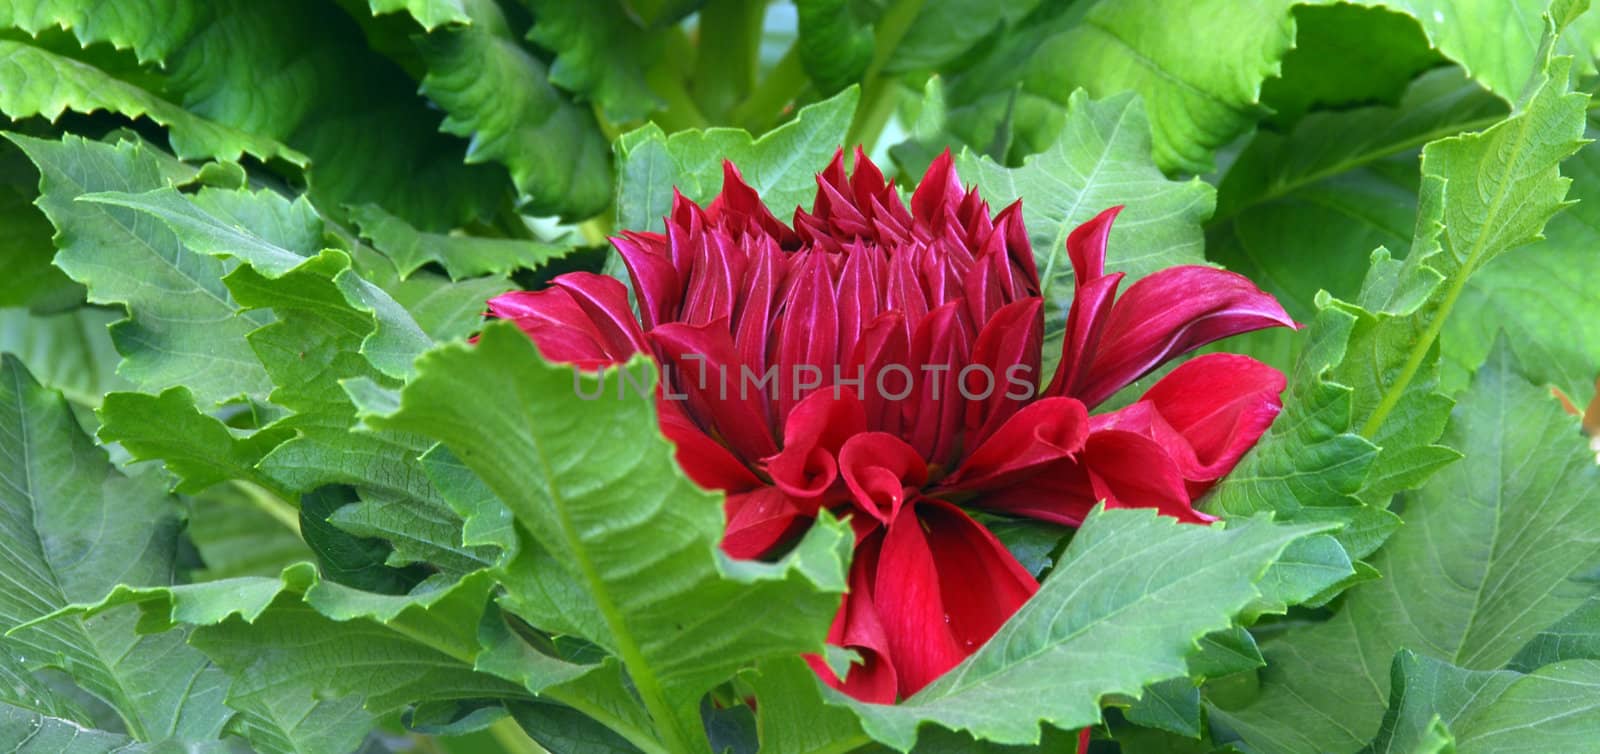 Red Dahlia Flower by nikonite